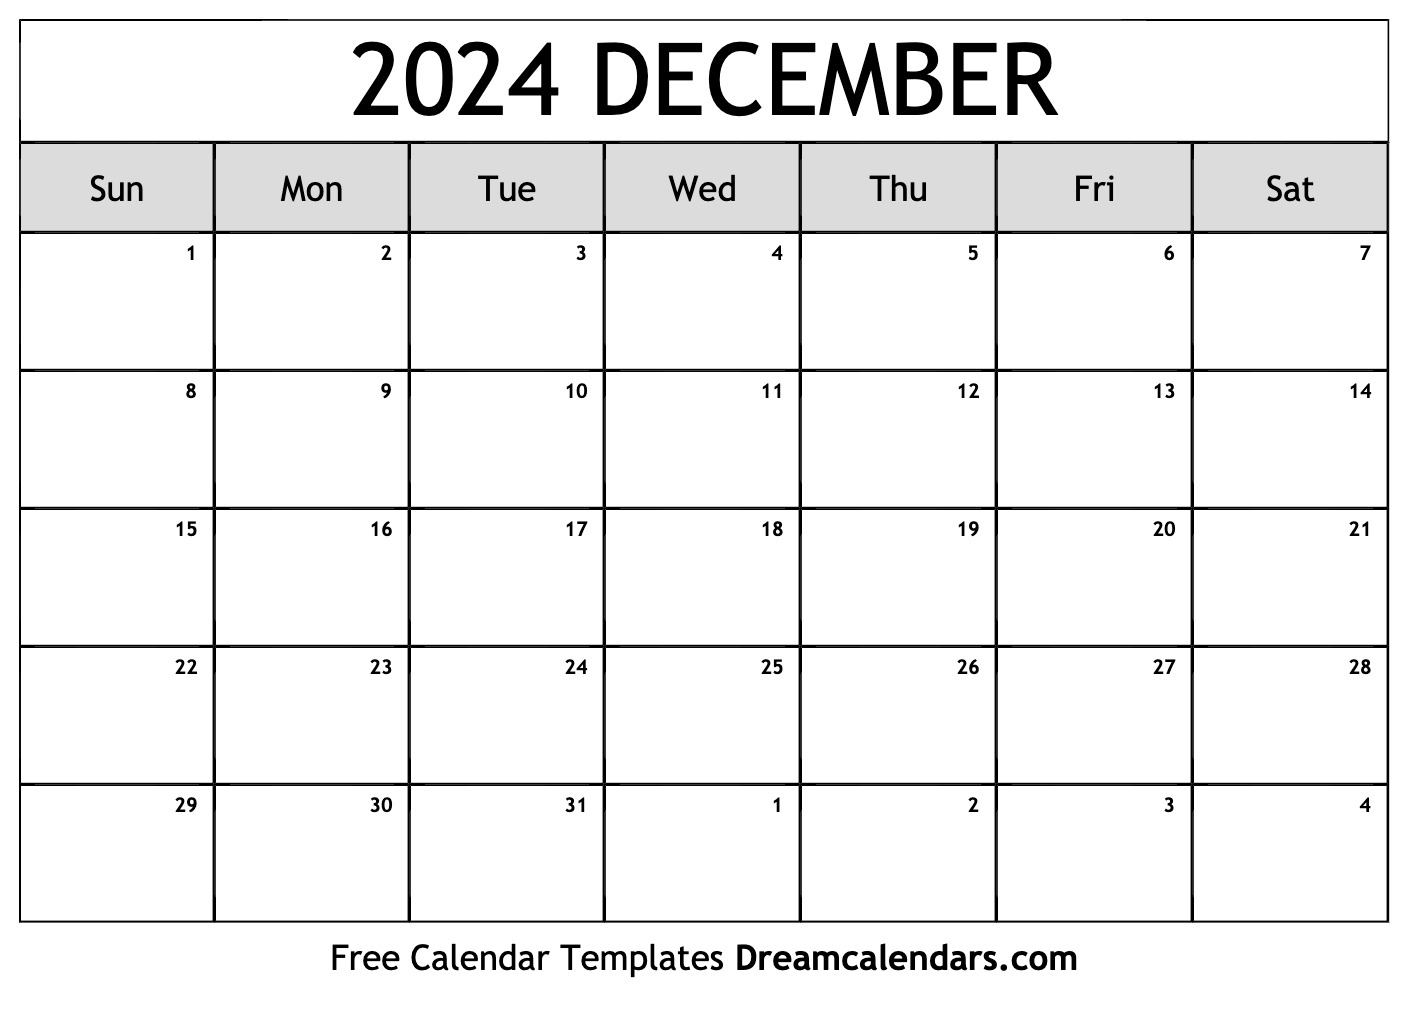 December 2024 Calendar Free Blank Printable With Holidays